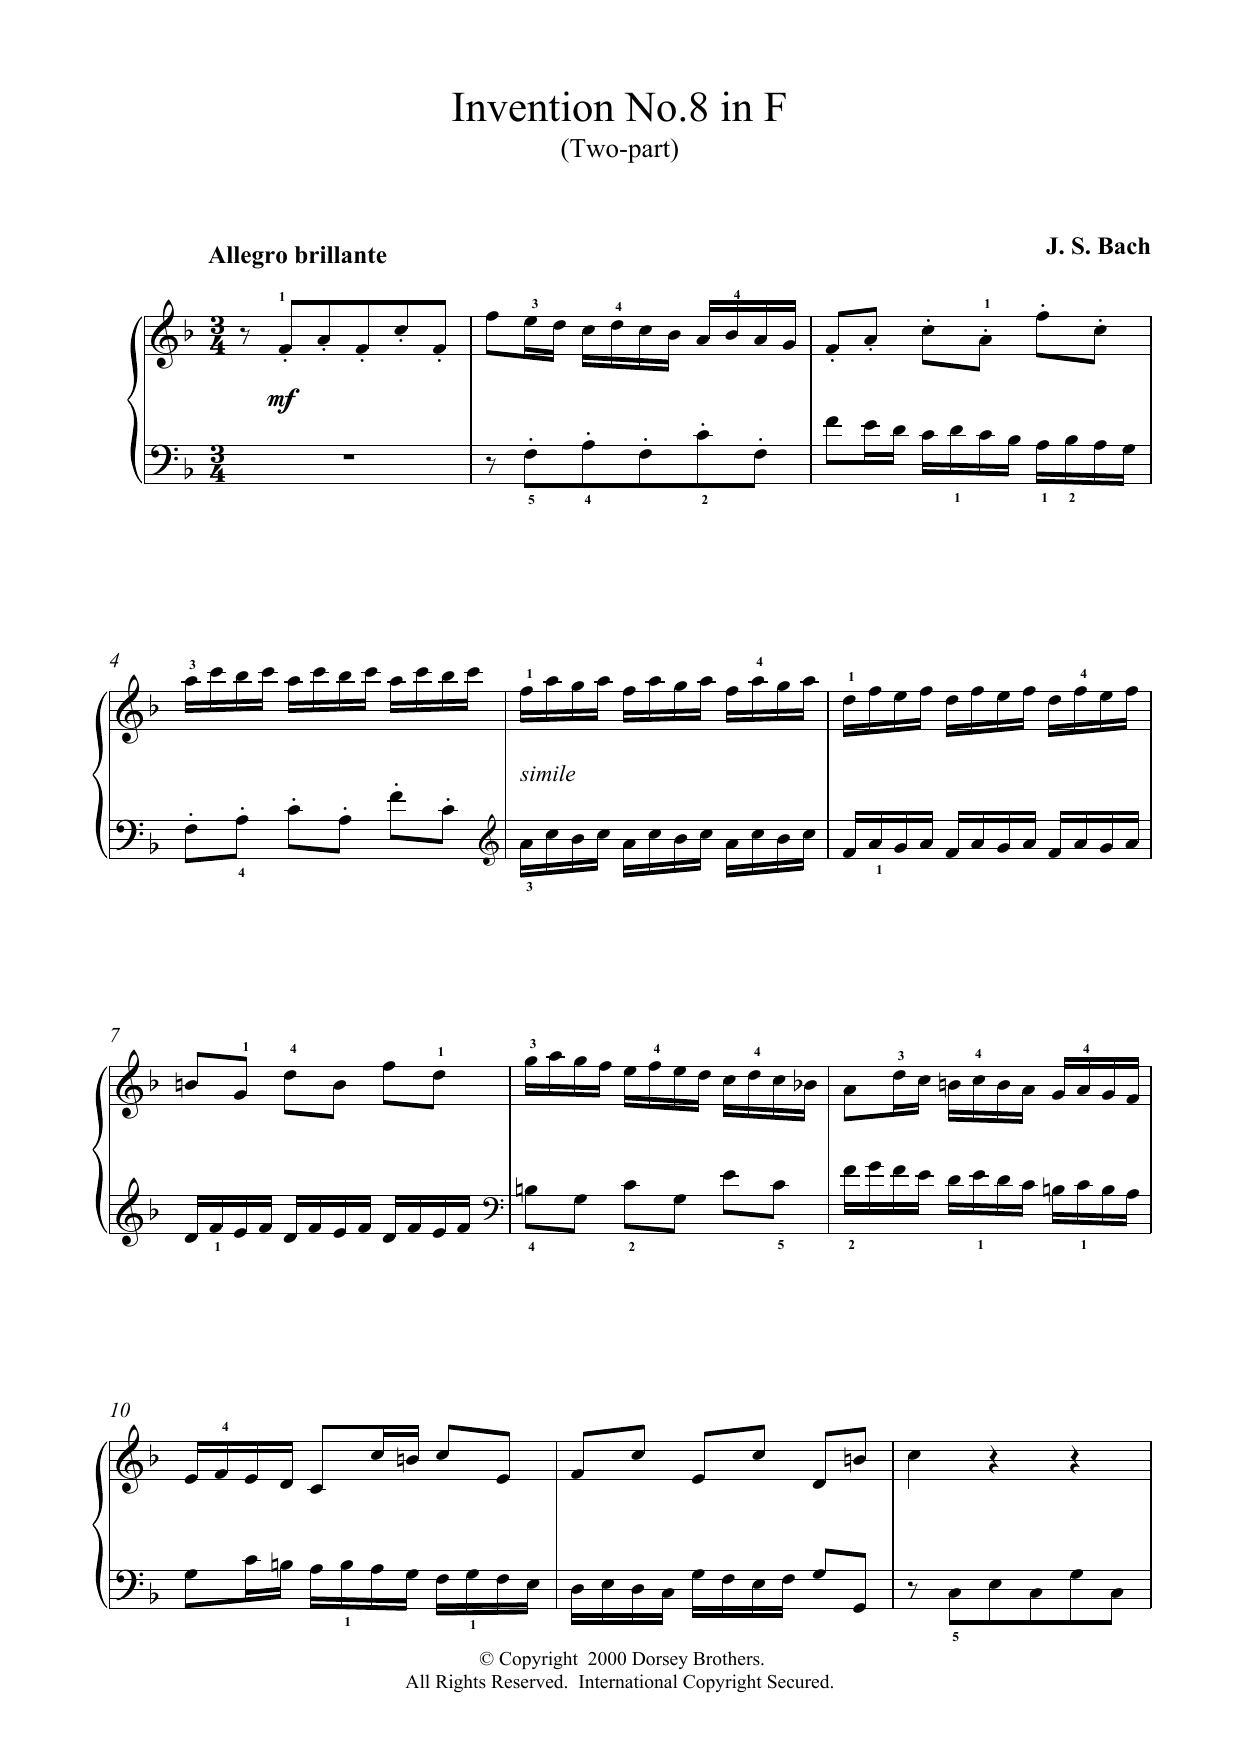 Johann Sebastian Bach Two-Part Invention No. 8 in F Major sheet music notes printable PDF score